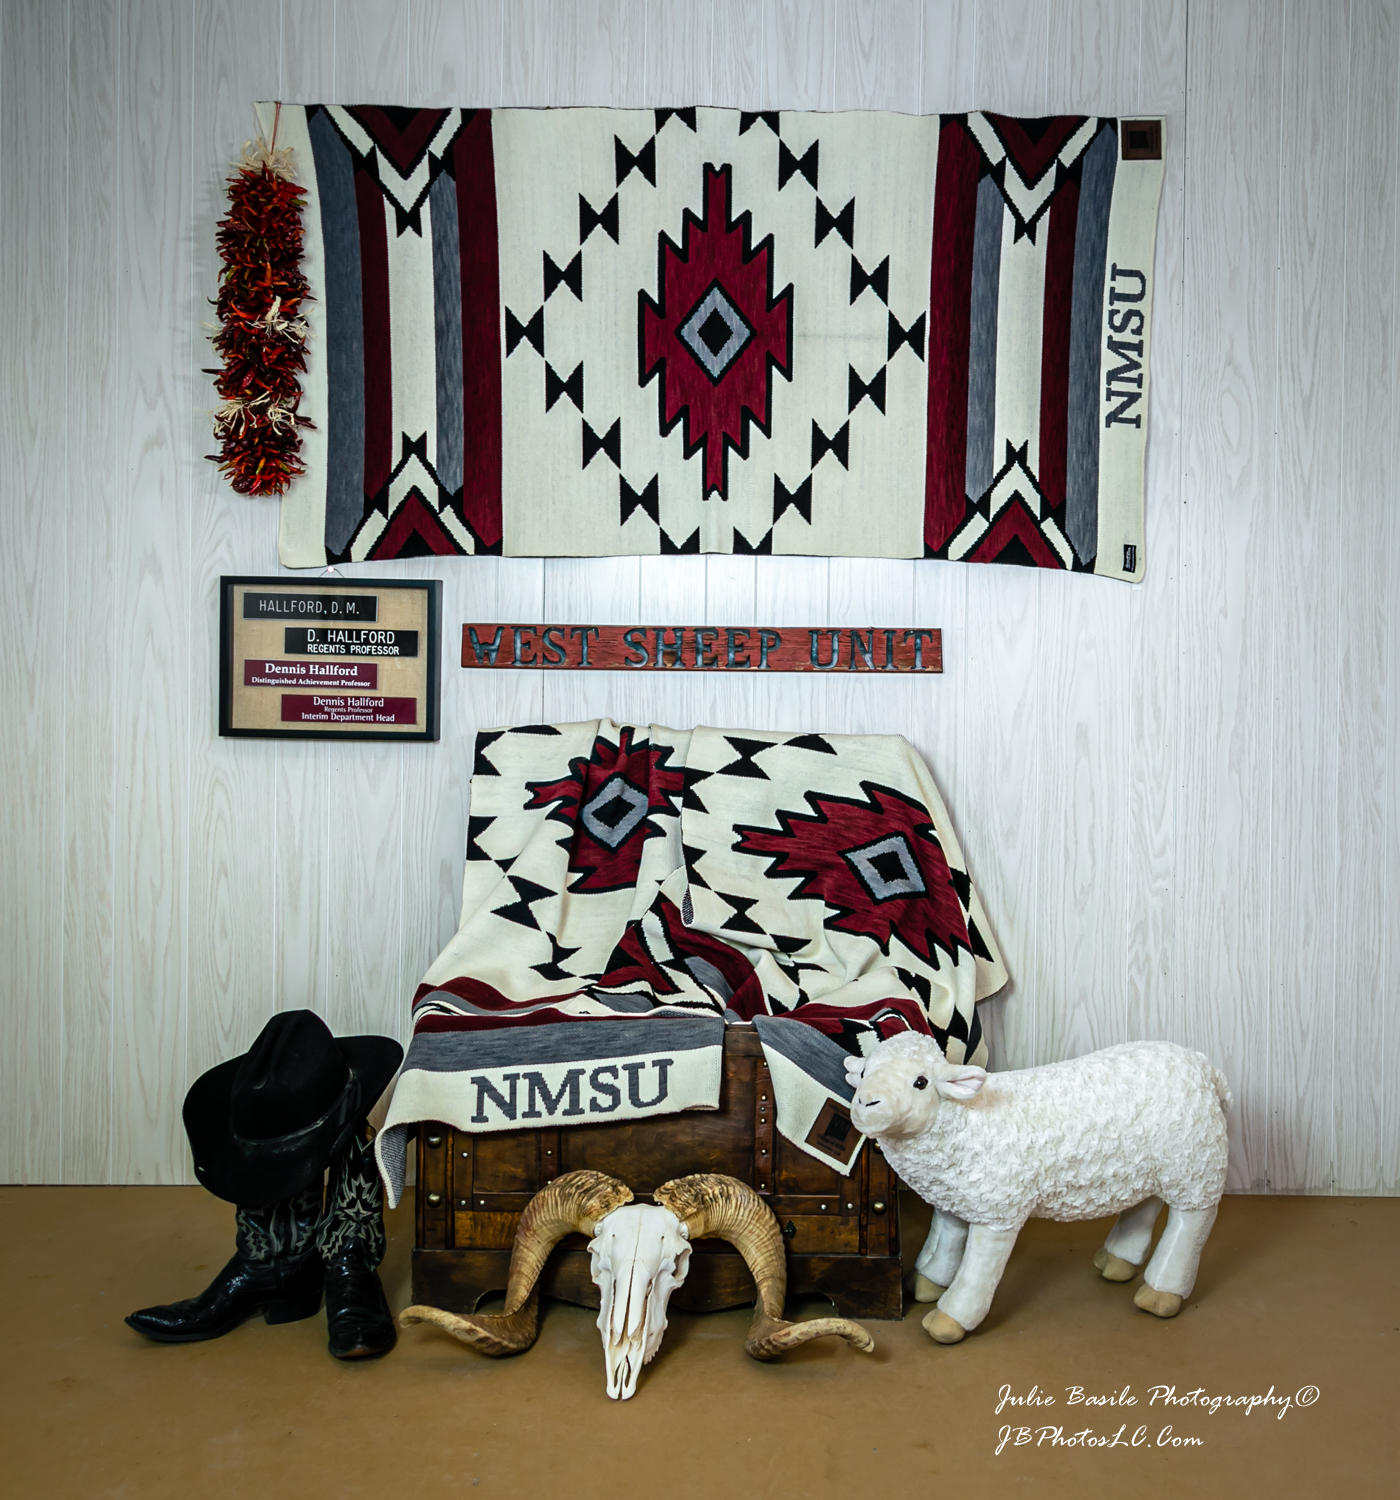 NMSU West Sheep Unit Blanket Sale